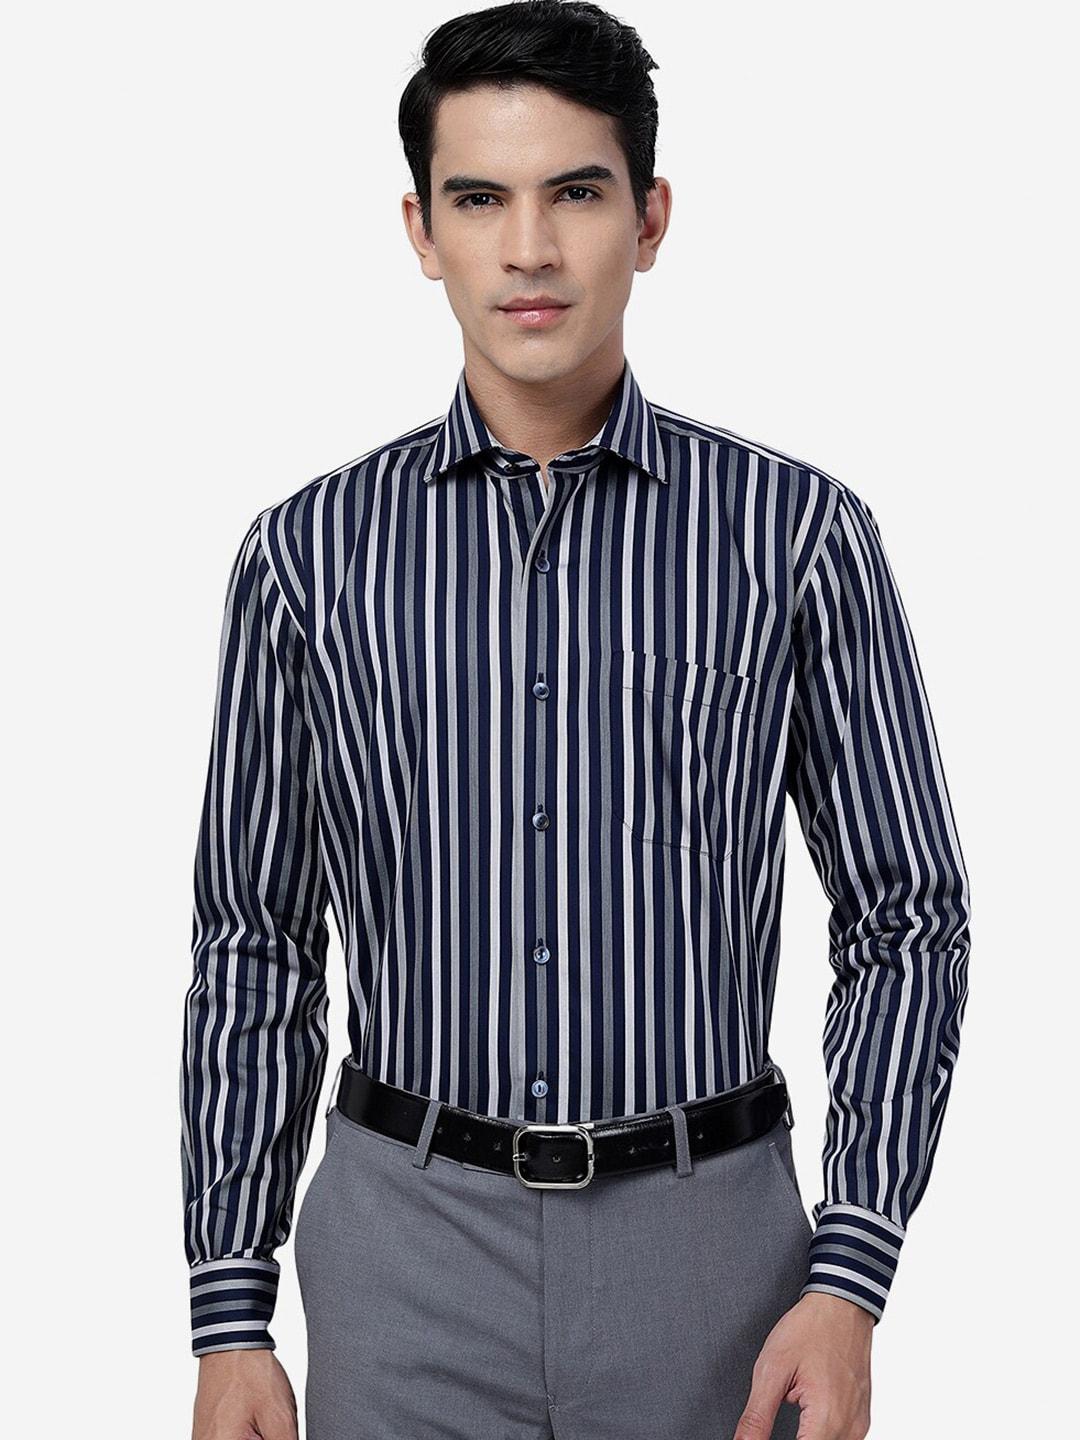 METAL Striped Spread Collar Slim Fit Cotton Formal Shirt